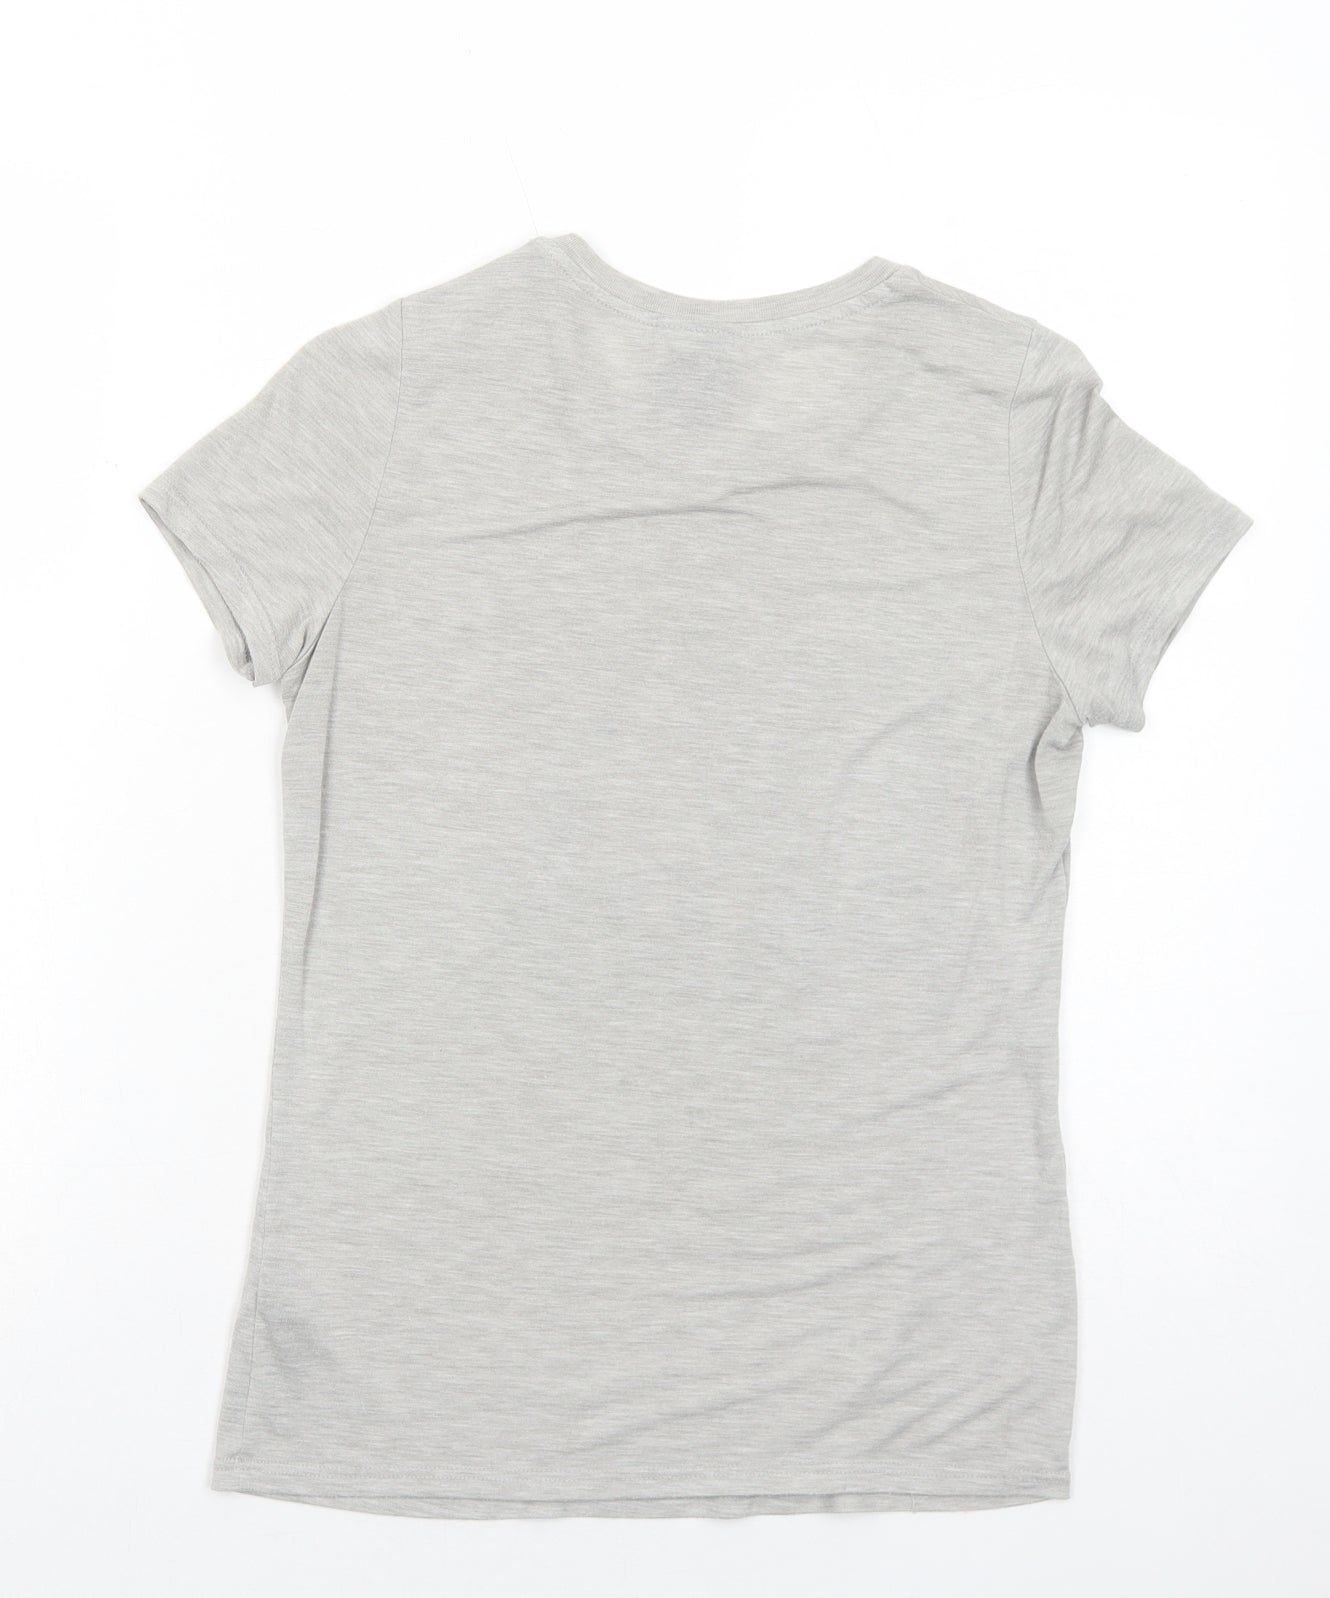 IVY PARK Womens Grey Polyester Basic T-Shirt Size S Round Neck - Ivy Park